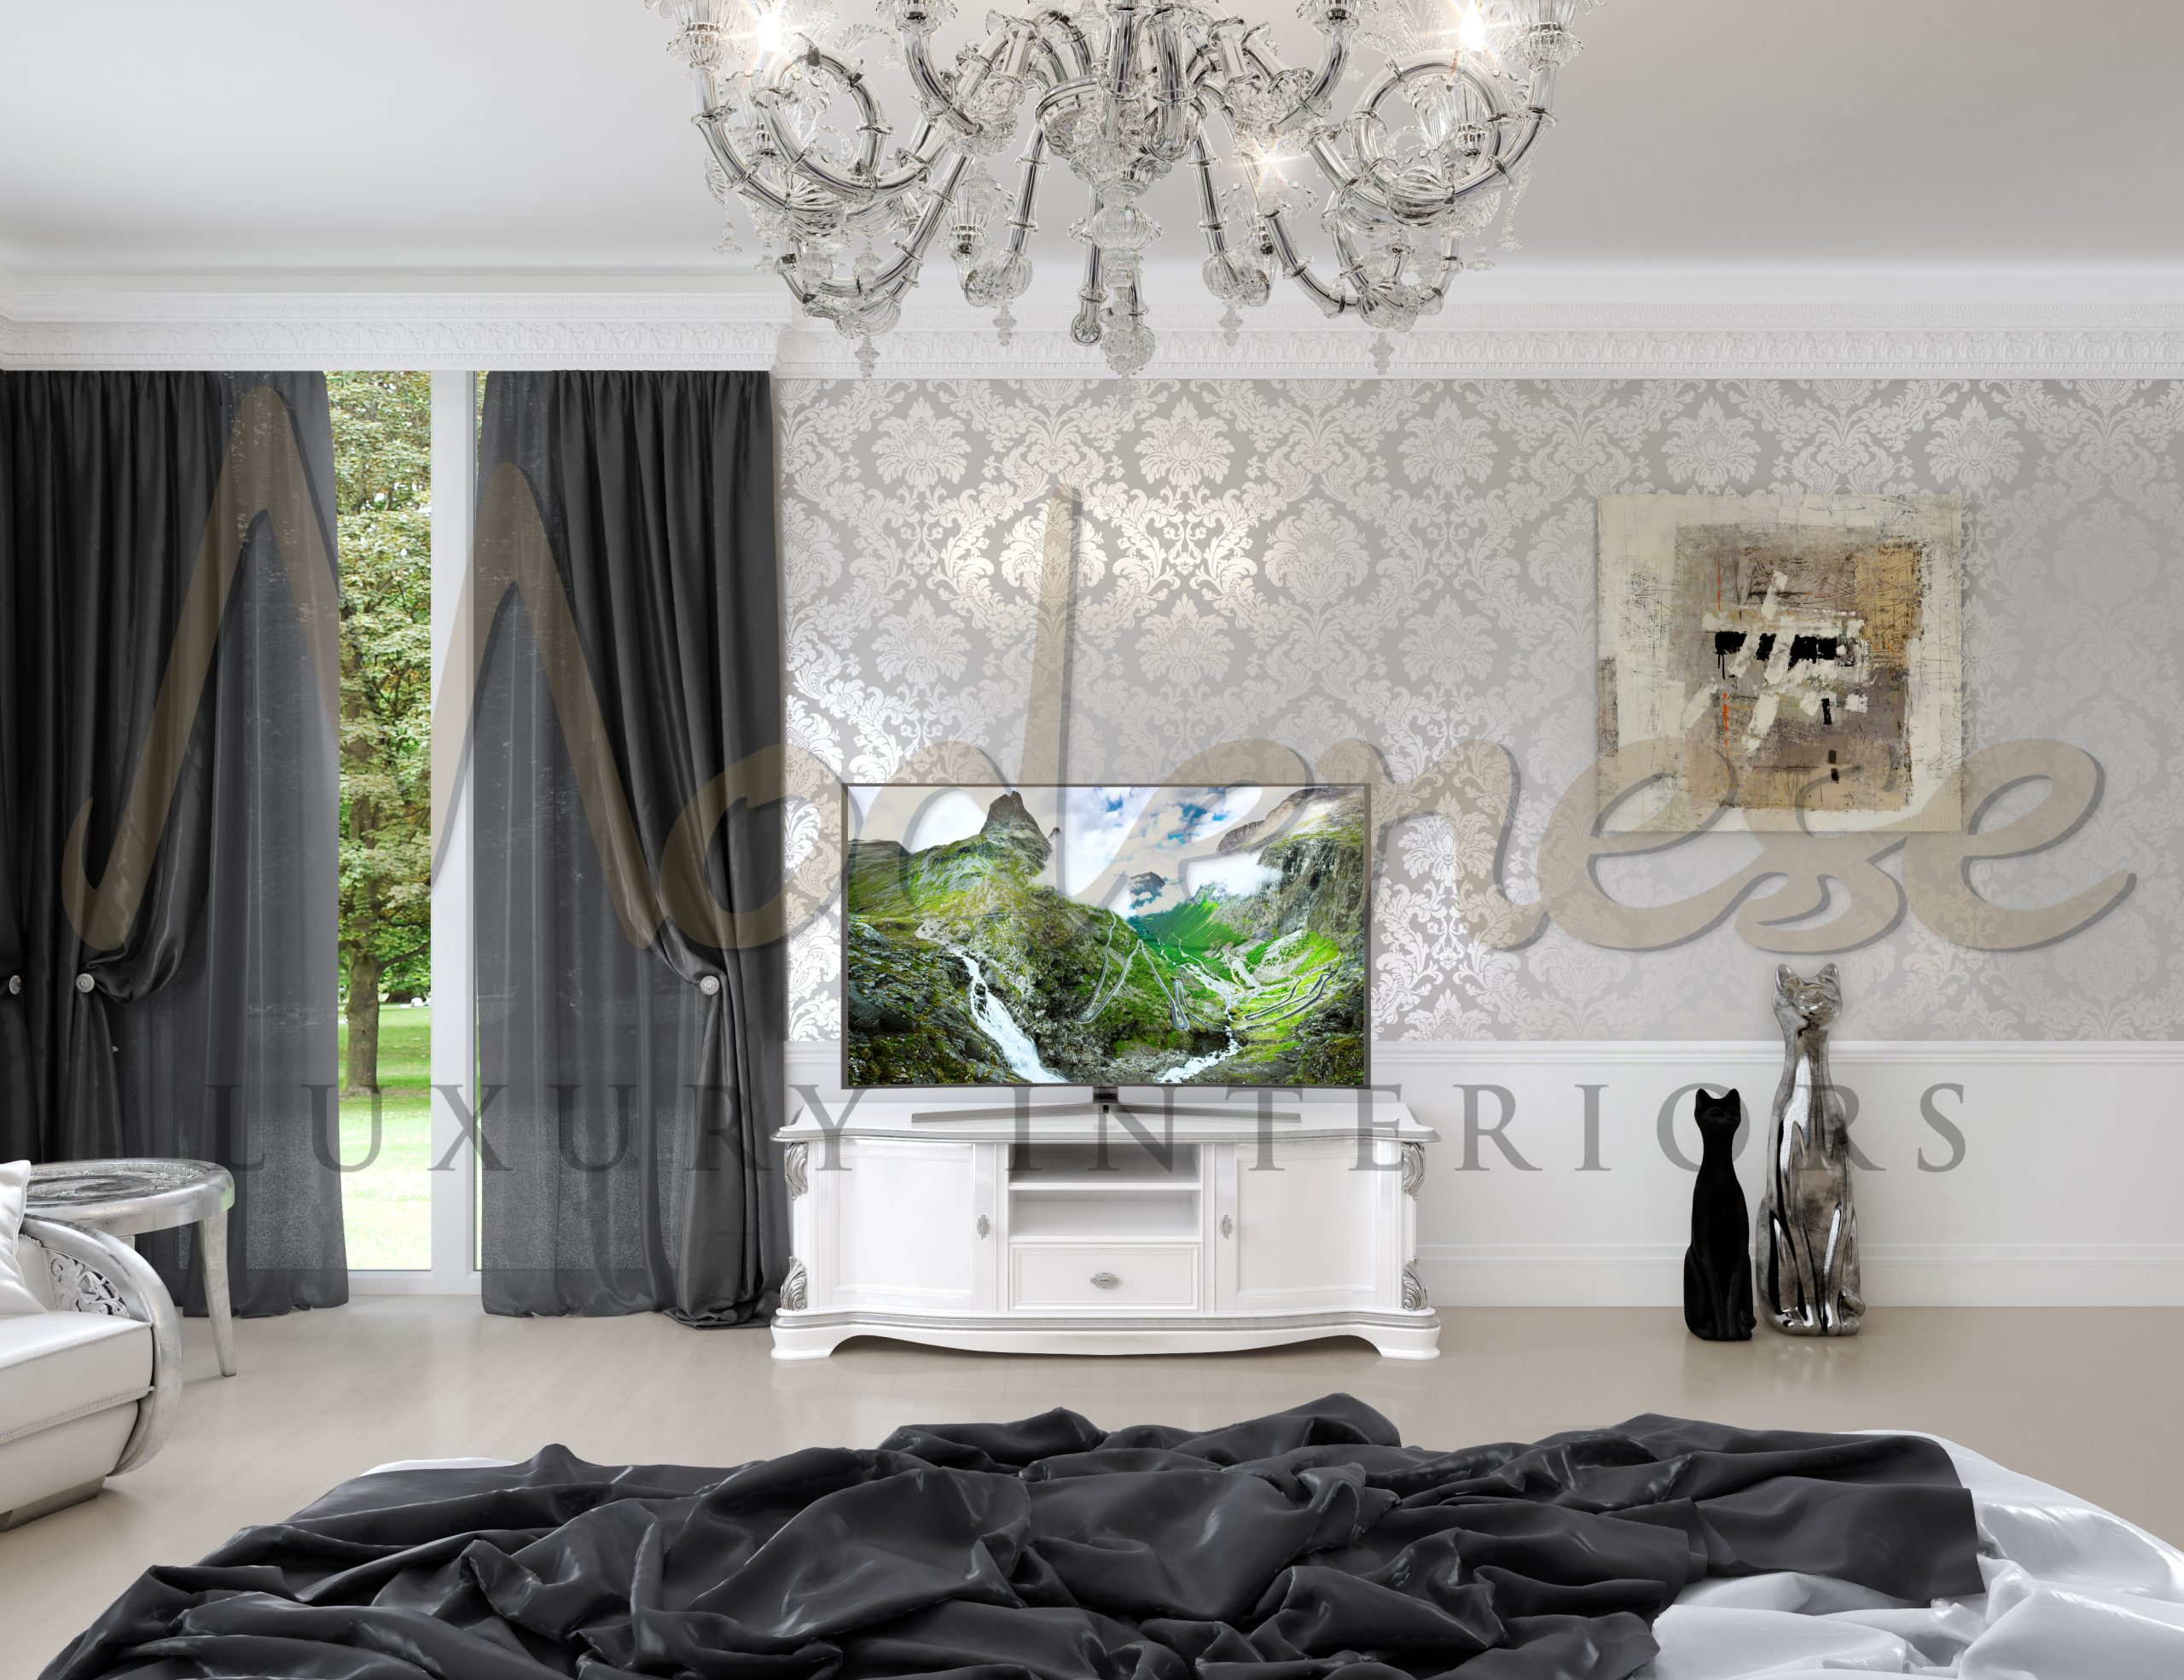 Extravagant Luxurious Interior Design Project in Paris, France